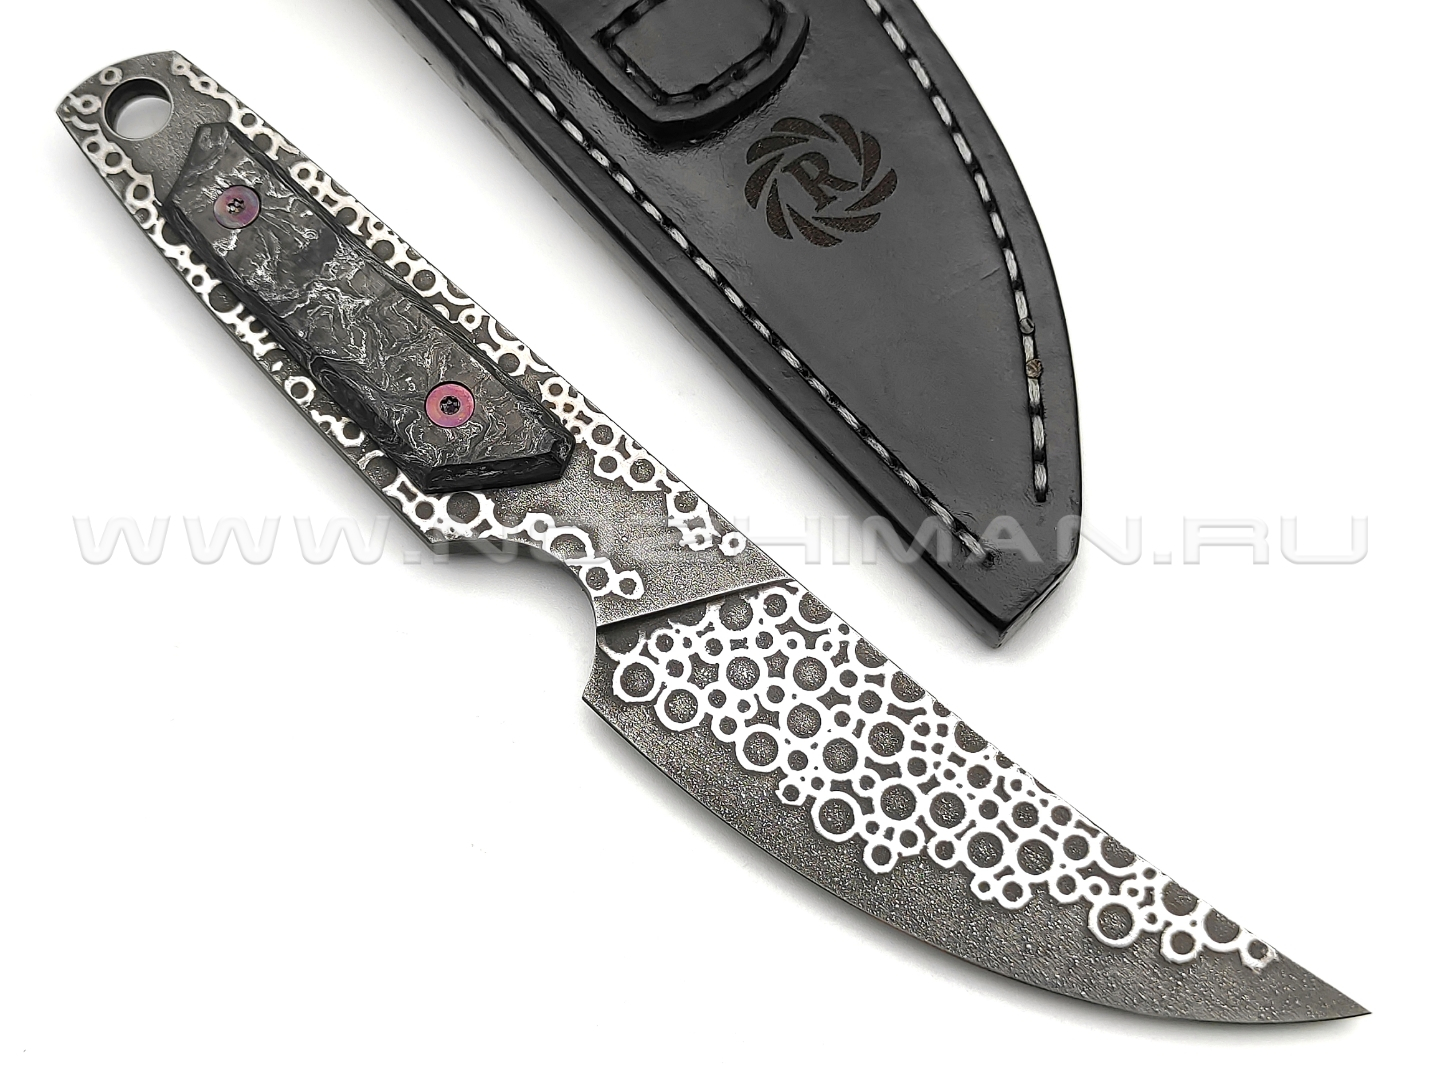 Neyris Knives нож Мехтар сталь CPM 3V, рукоять Carbon fiber dark matter silver